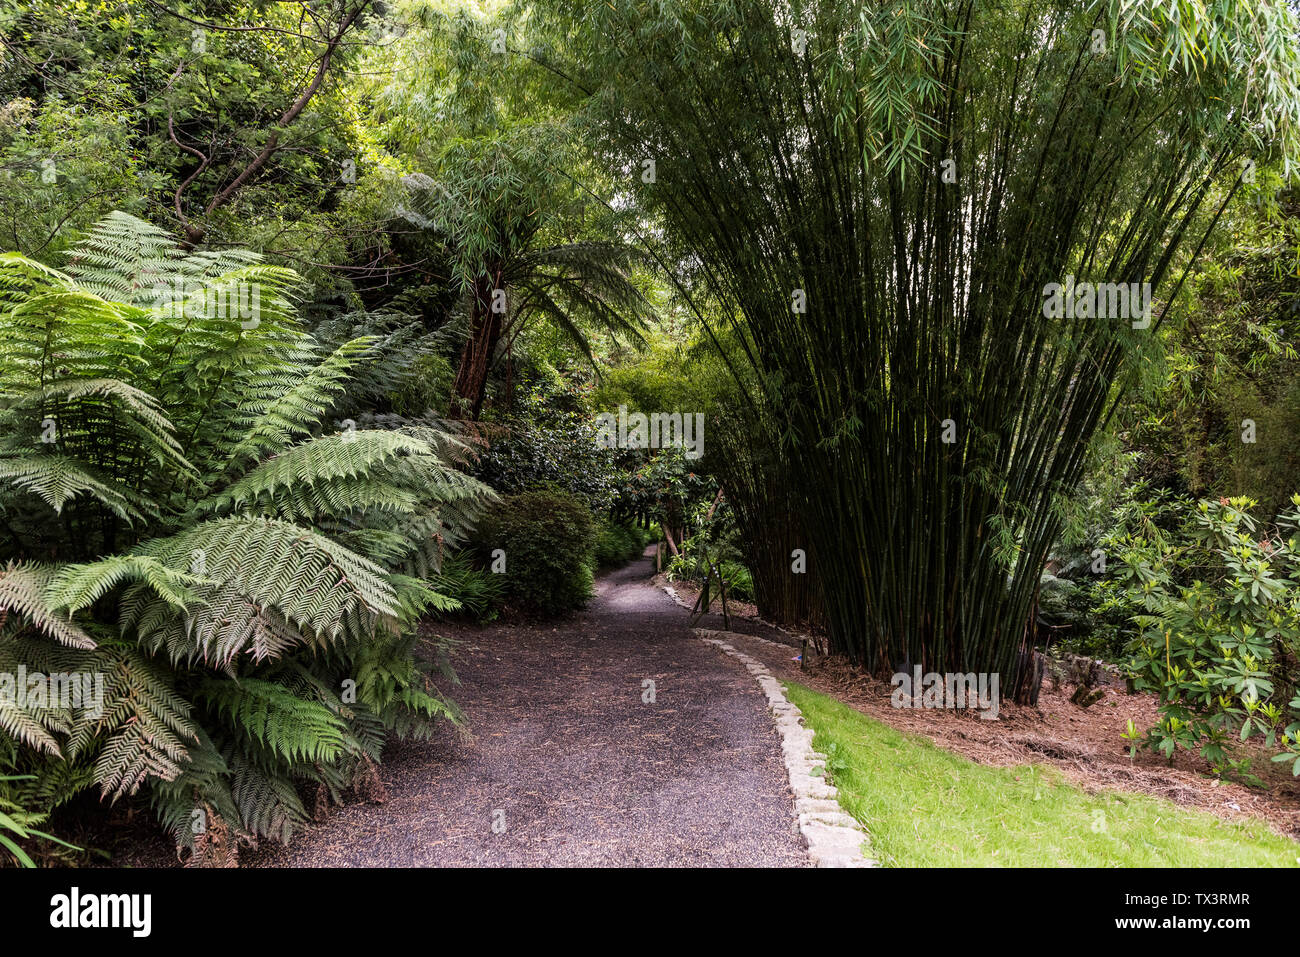 The sub-tropical Trebah Garden in Cornwall. Stock Photo